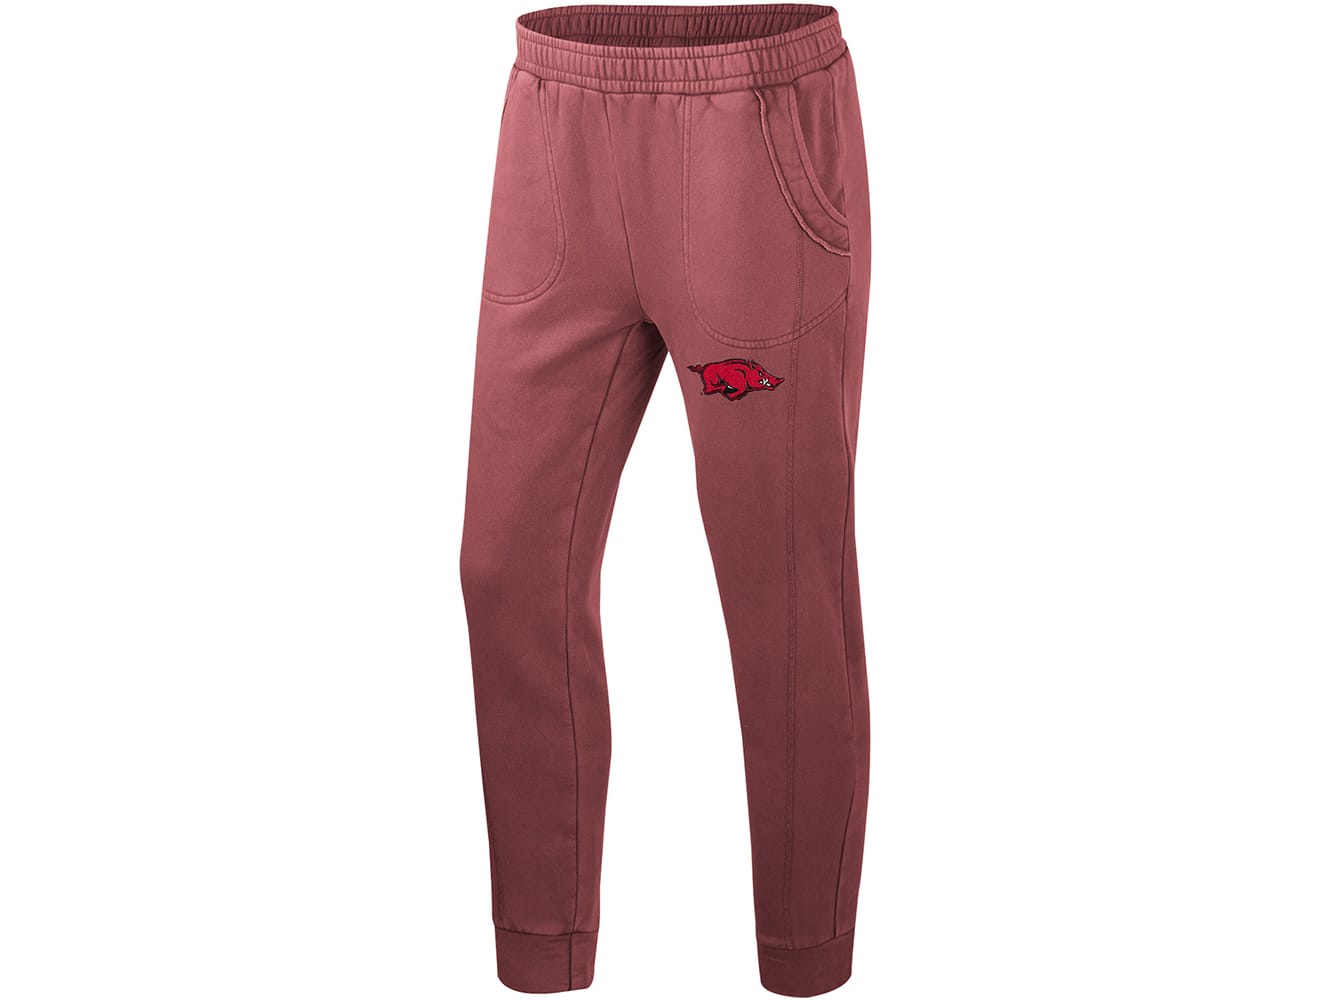  Arkansas Open Bottom Red Sweat Pants (Medium) : Clothing, Shoes  & Jewelry